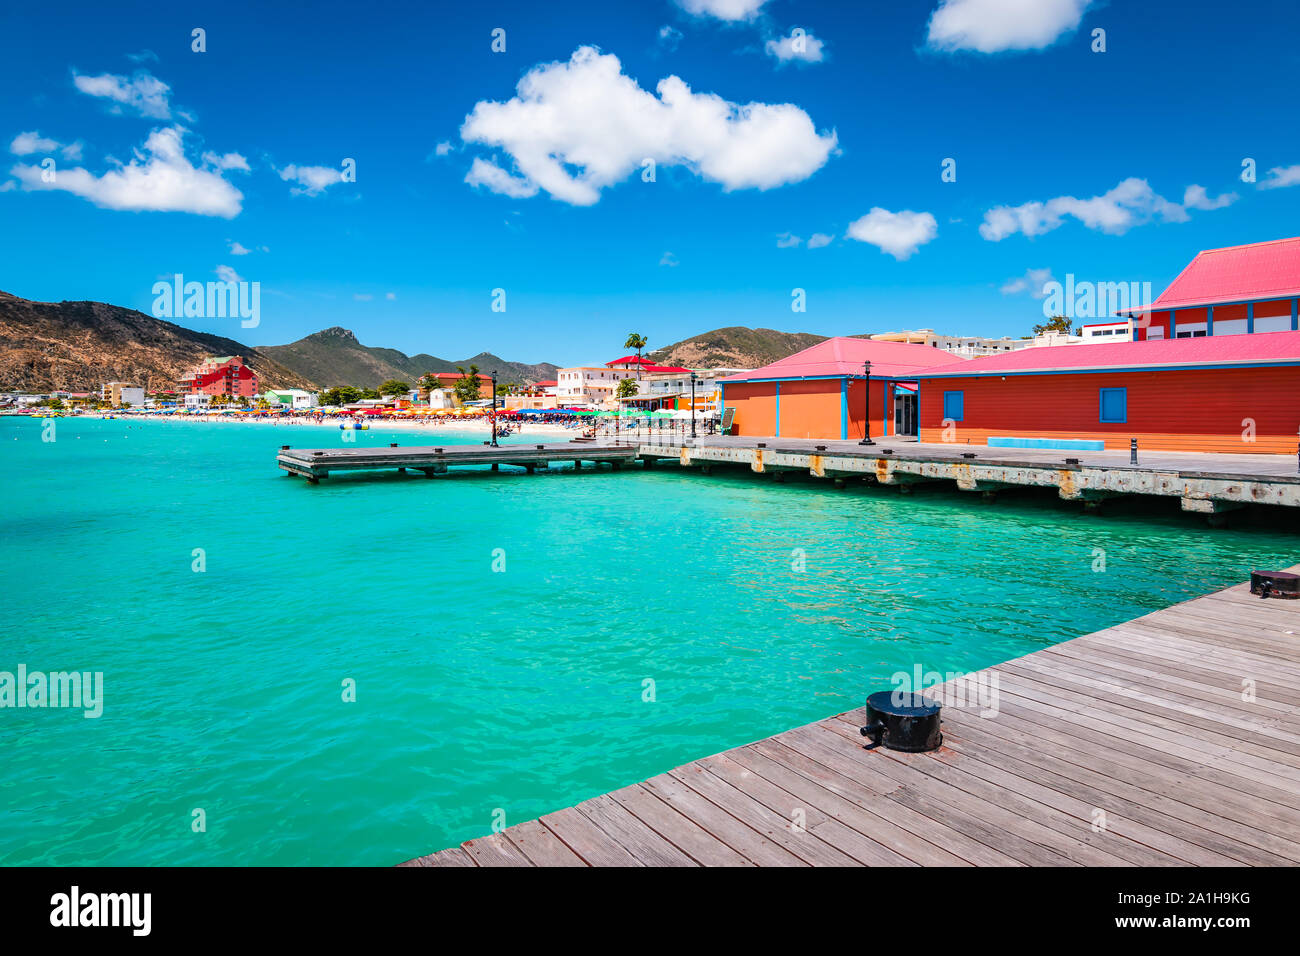 Philipsburg, St Maarten (Sint Maarten, Saint Martin), Caribbean. Wooden dock and colorful buildings at Great Bay beach. Popular cruise destination. Stock Photo